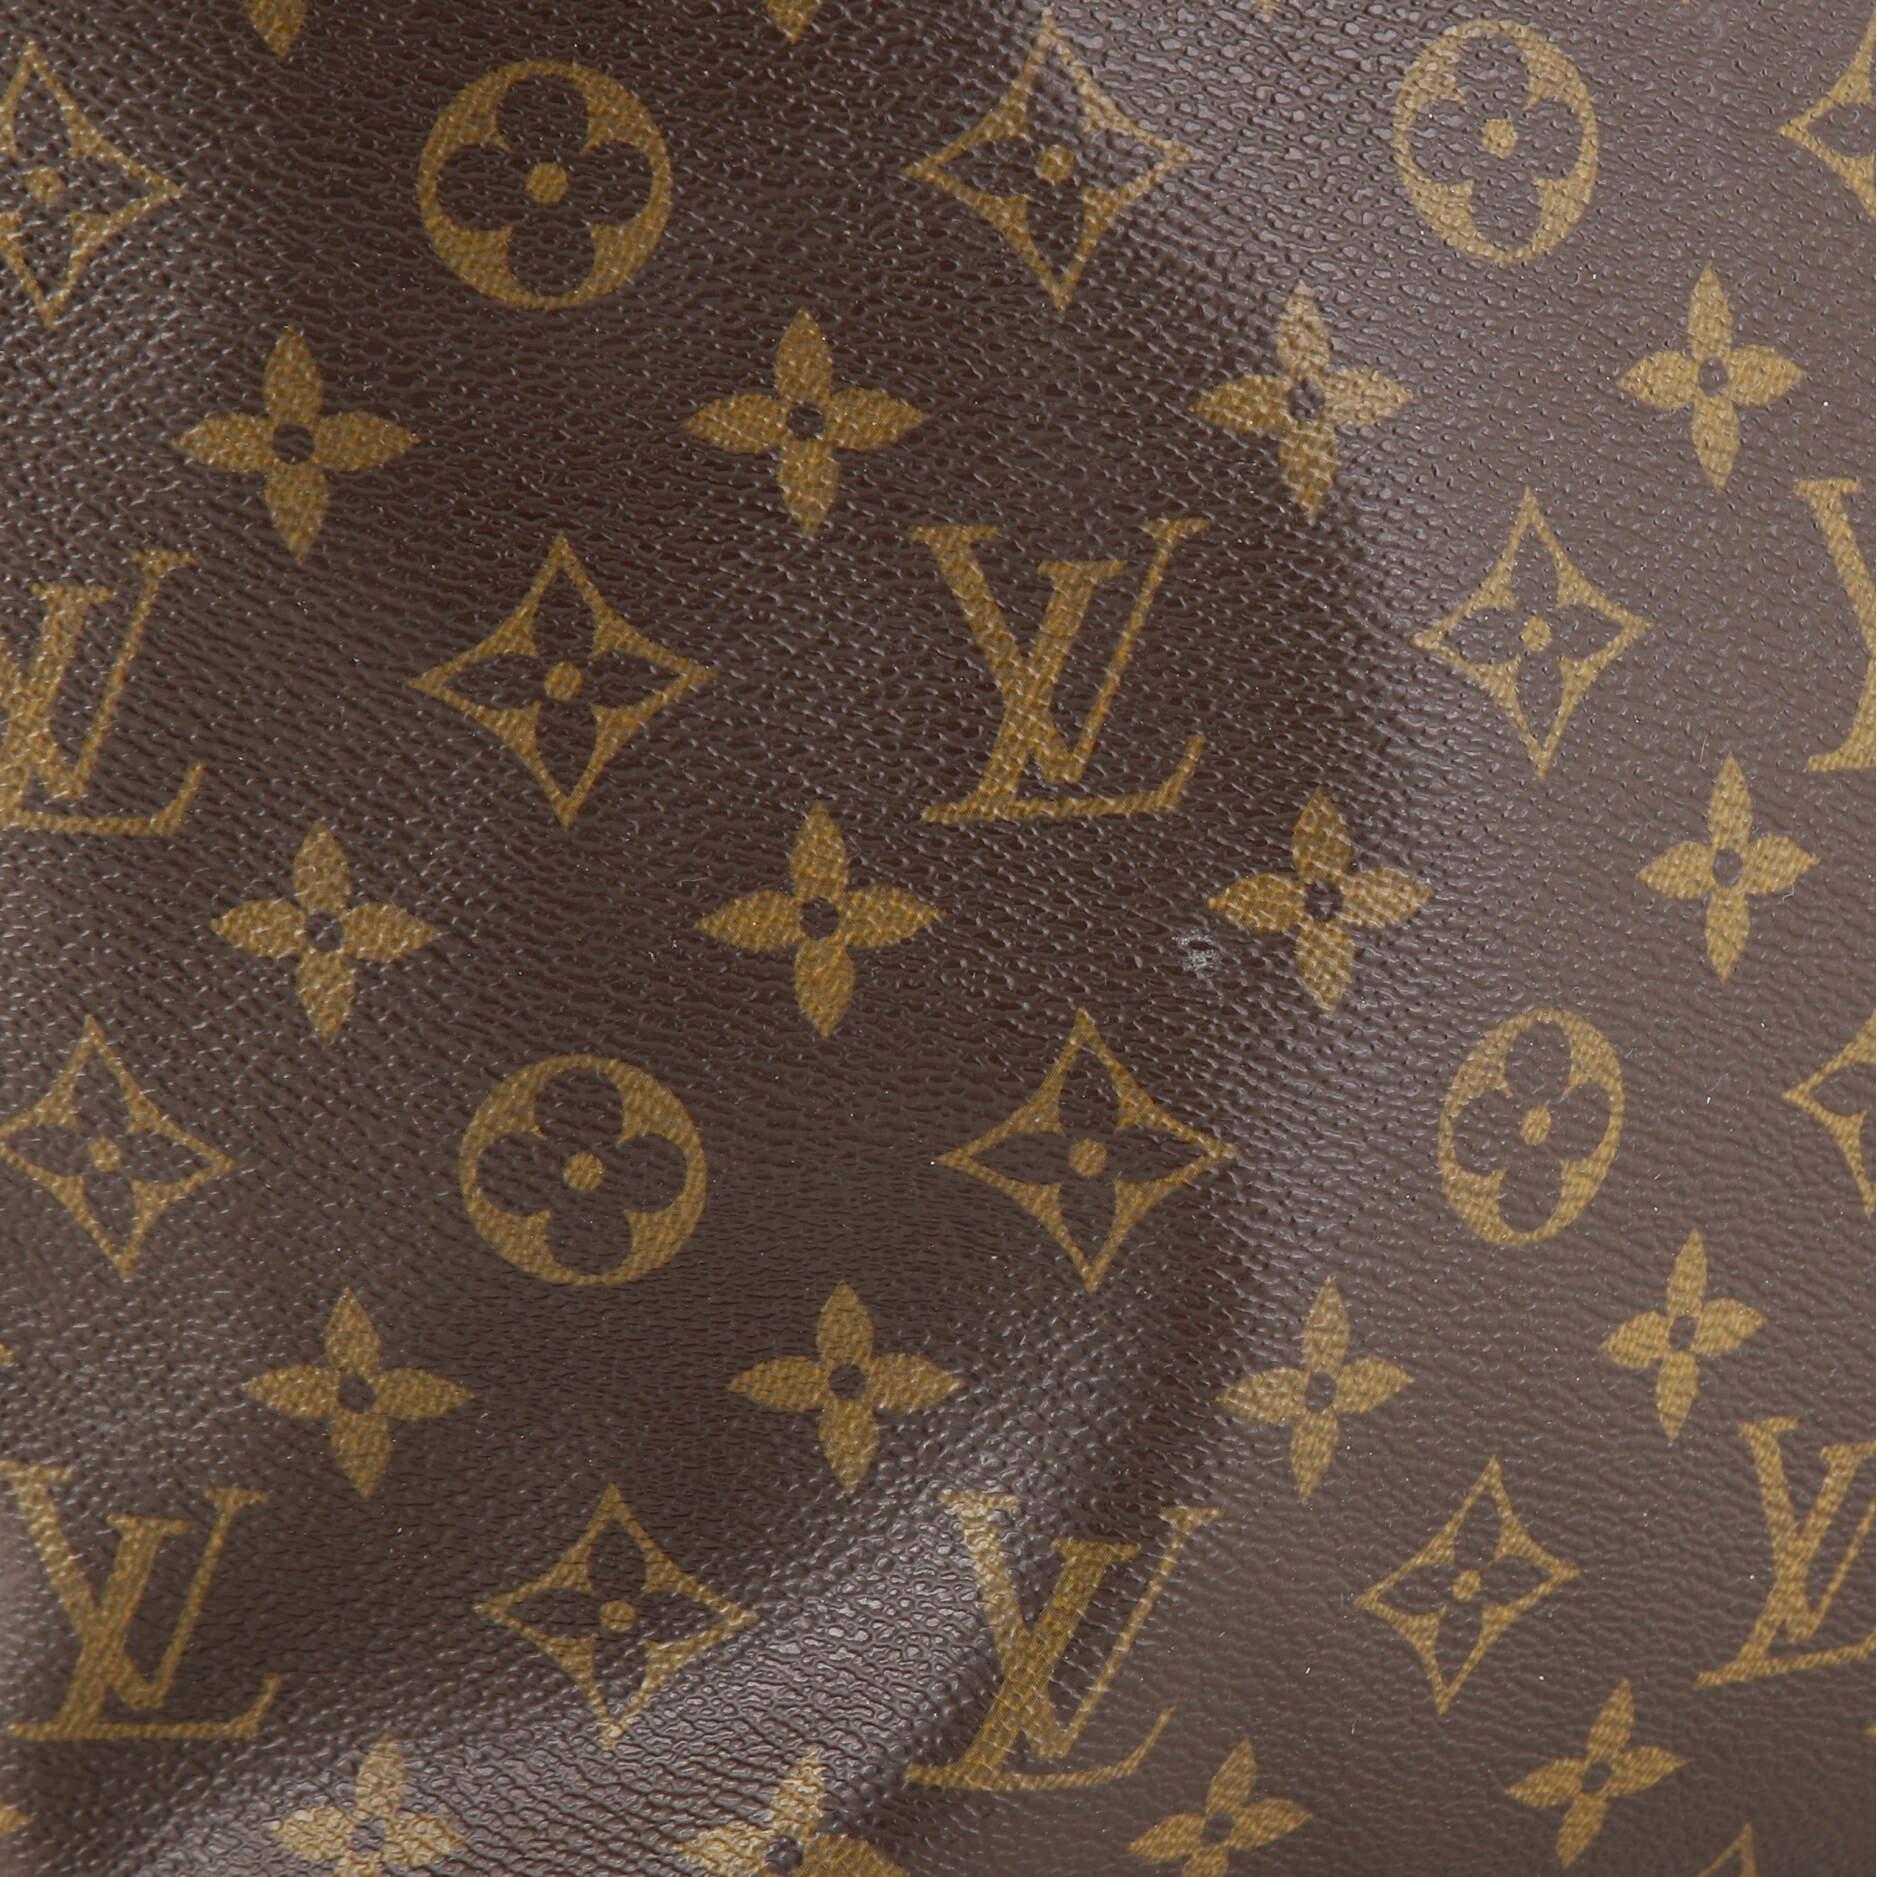 Louis Vuitton Raspail Tote Monogram Canvas MM 2